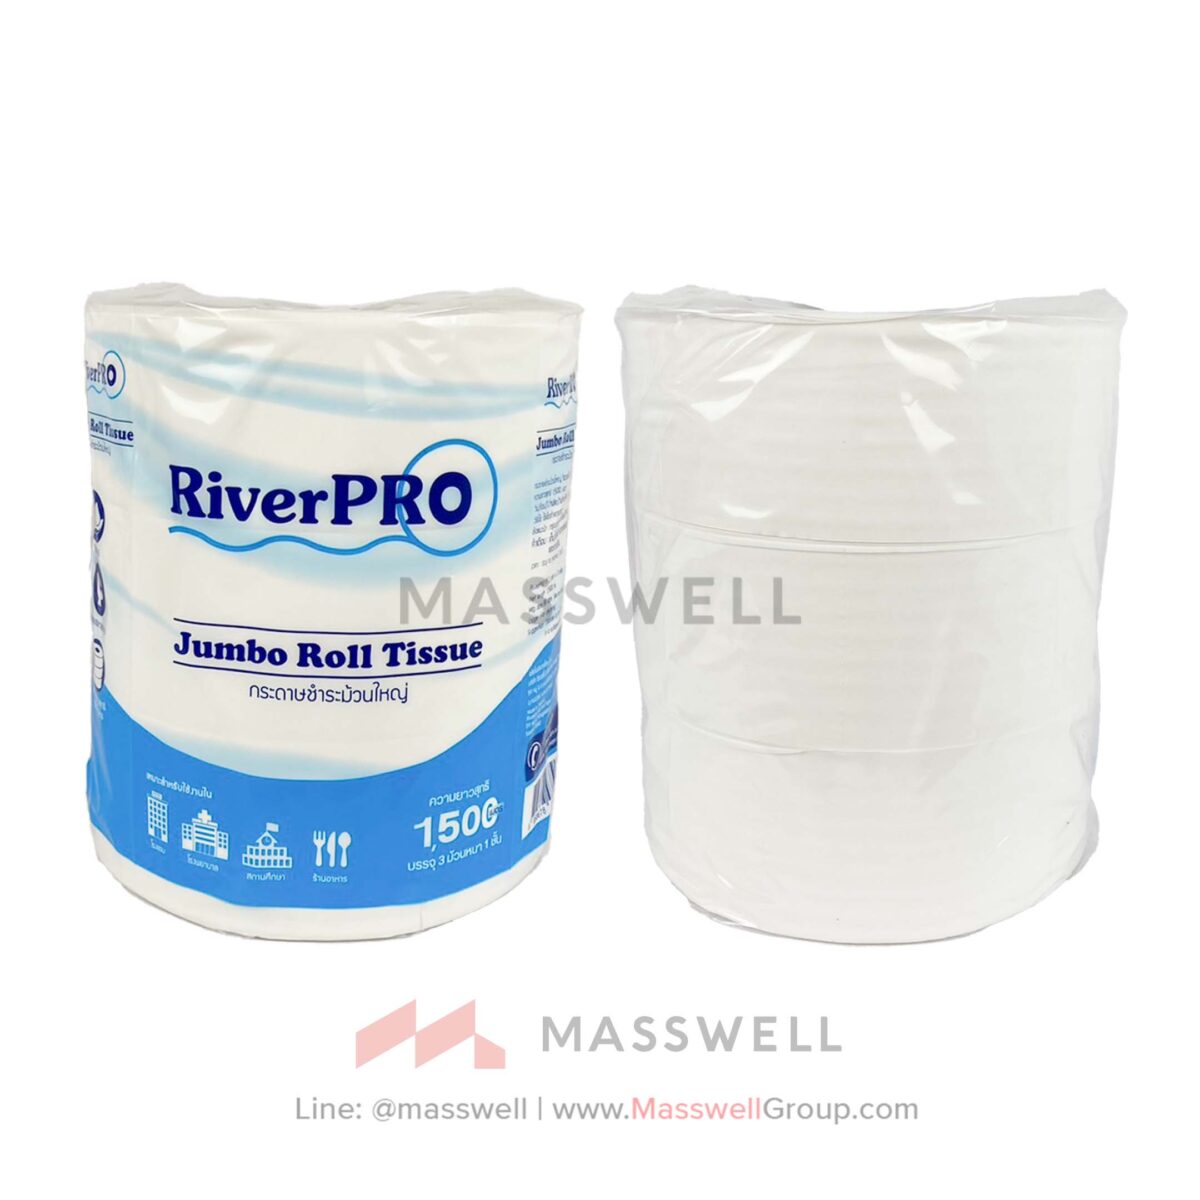 RIVERPRO Special Jumbo Roll Tissue, 1-Ply : 500 m. (3 Rolls) x4 Packs